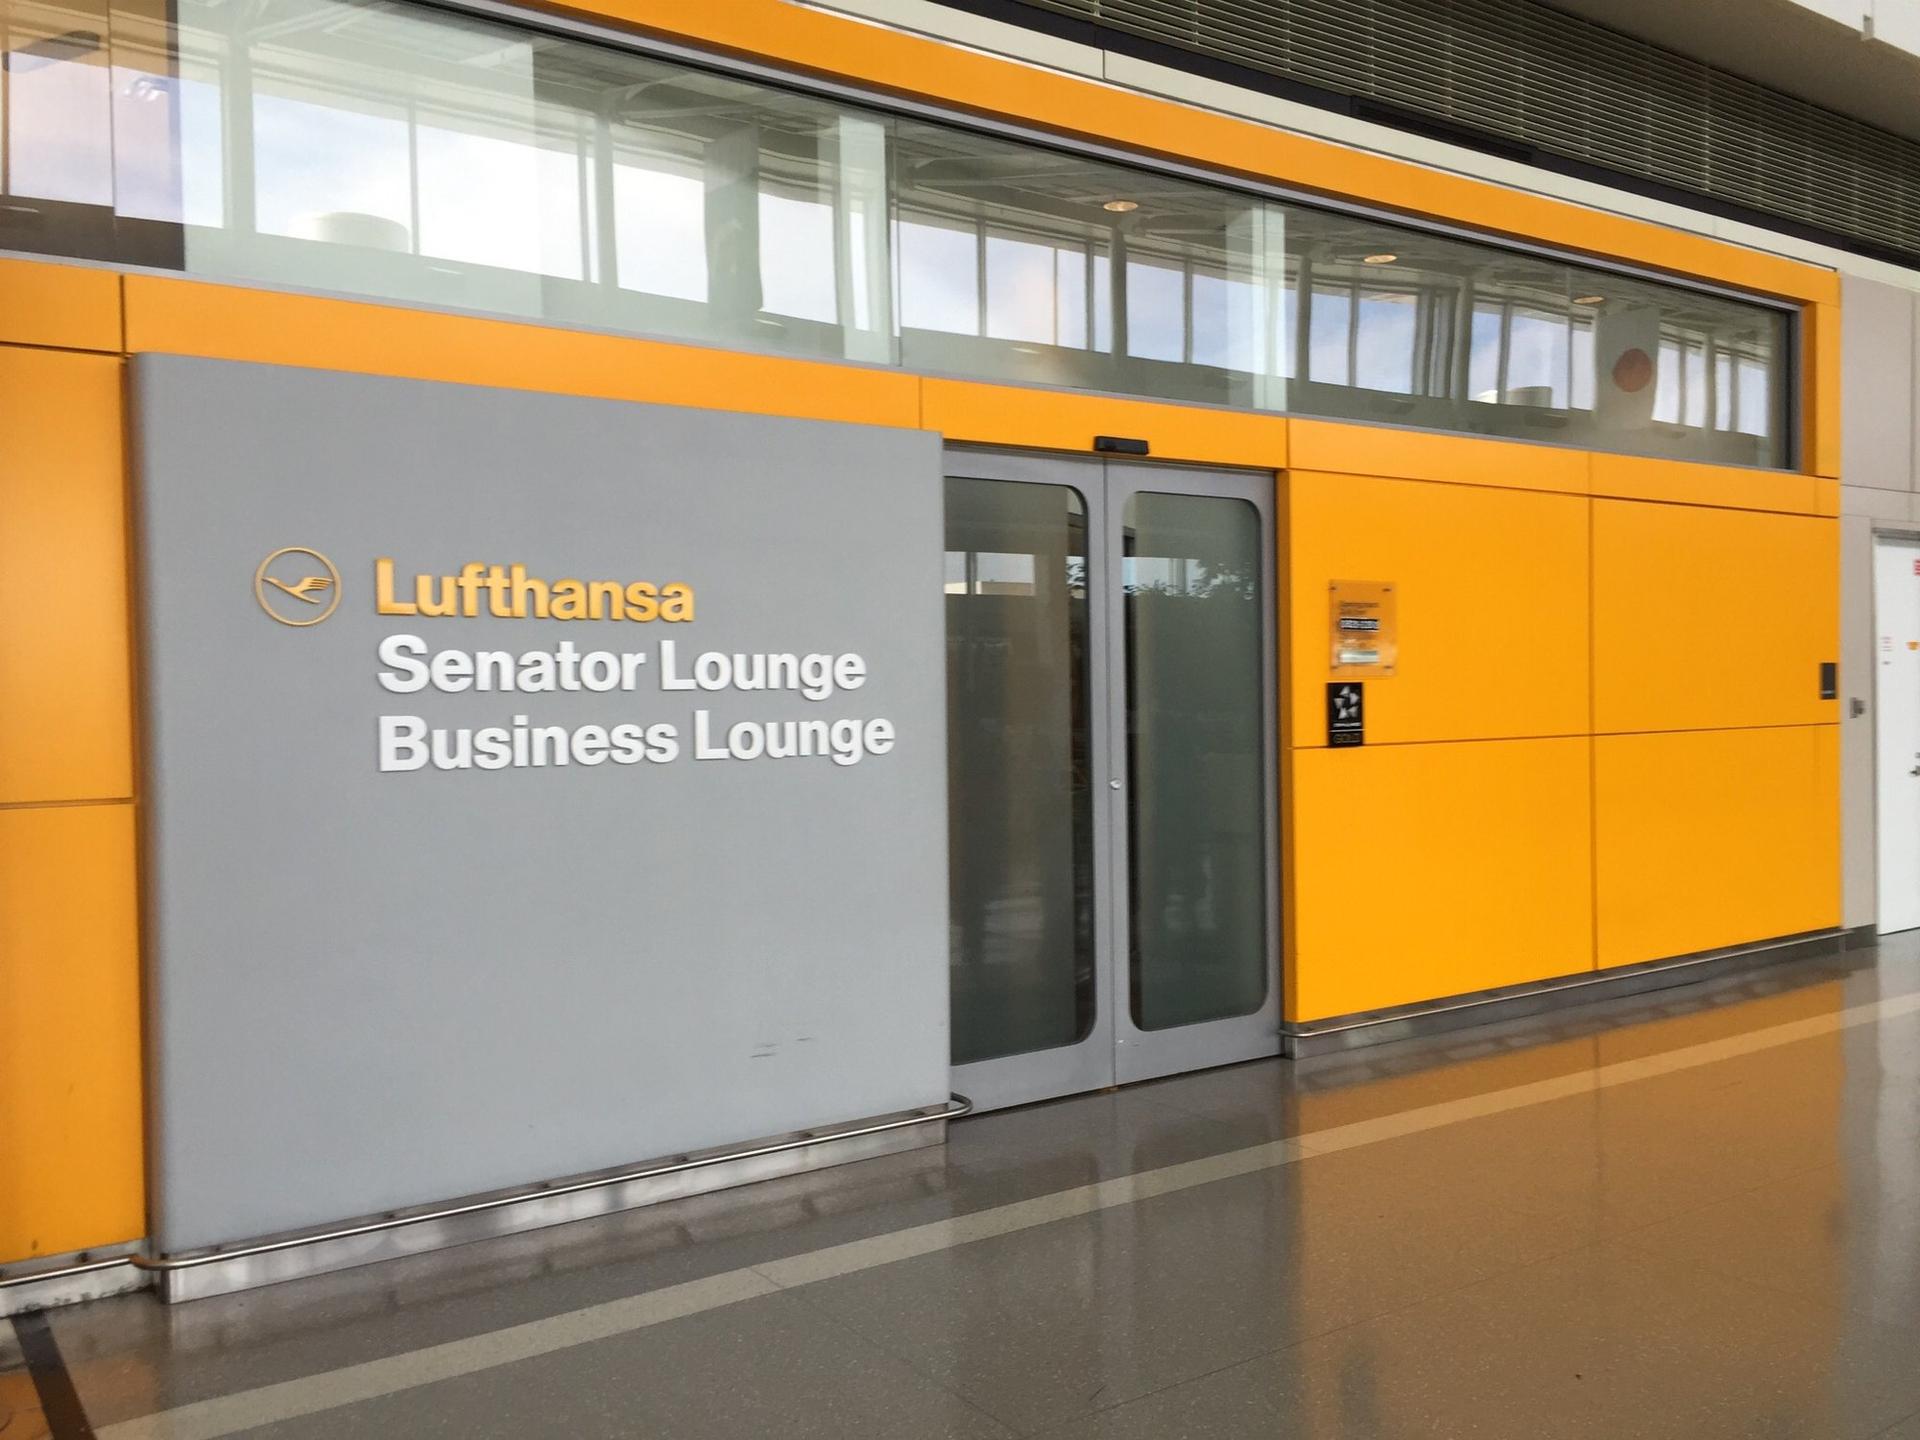 Lufthansa Business Lounge image 2 of 35